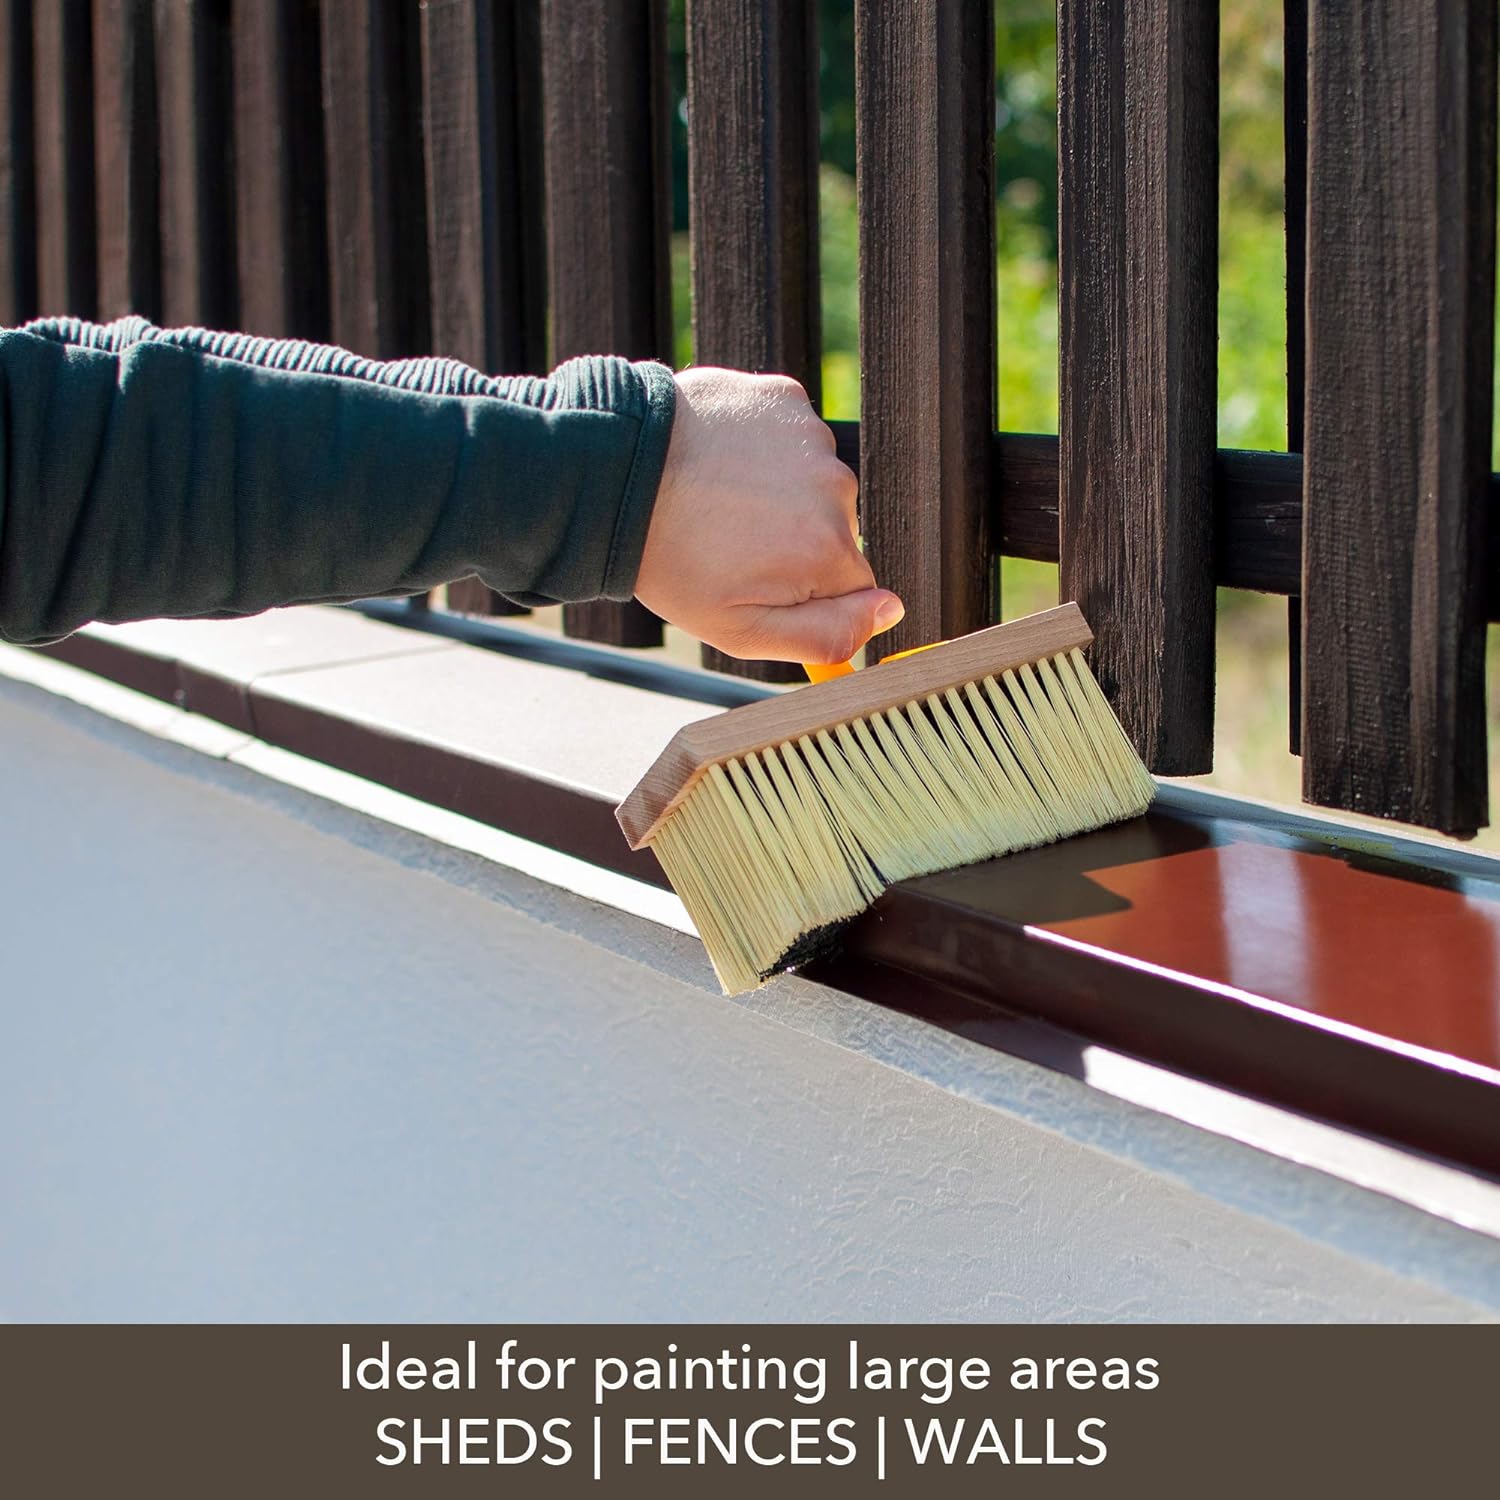 Wallpaper Brush - Large Paint Brush for Wallpaper Paste, Professional Pasting Brush